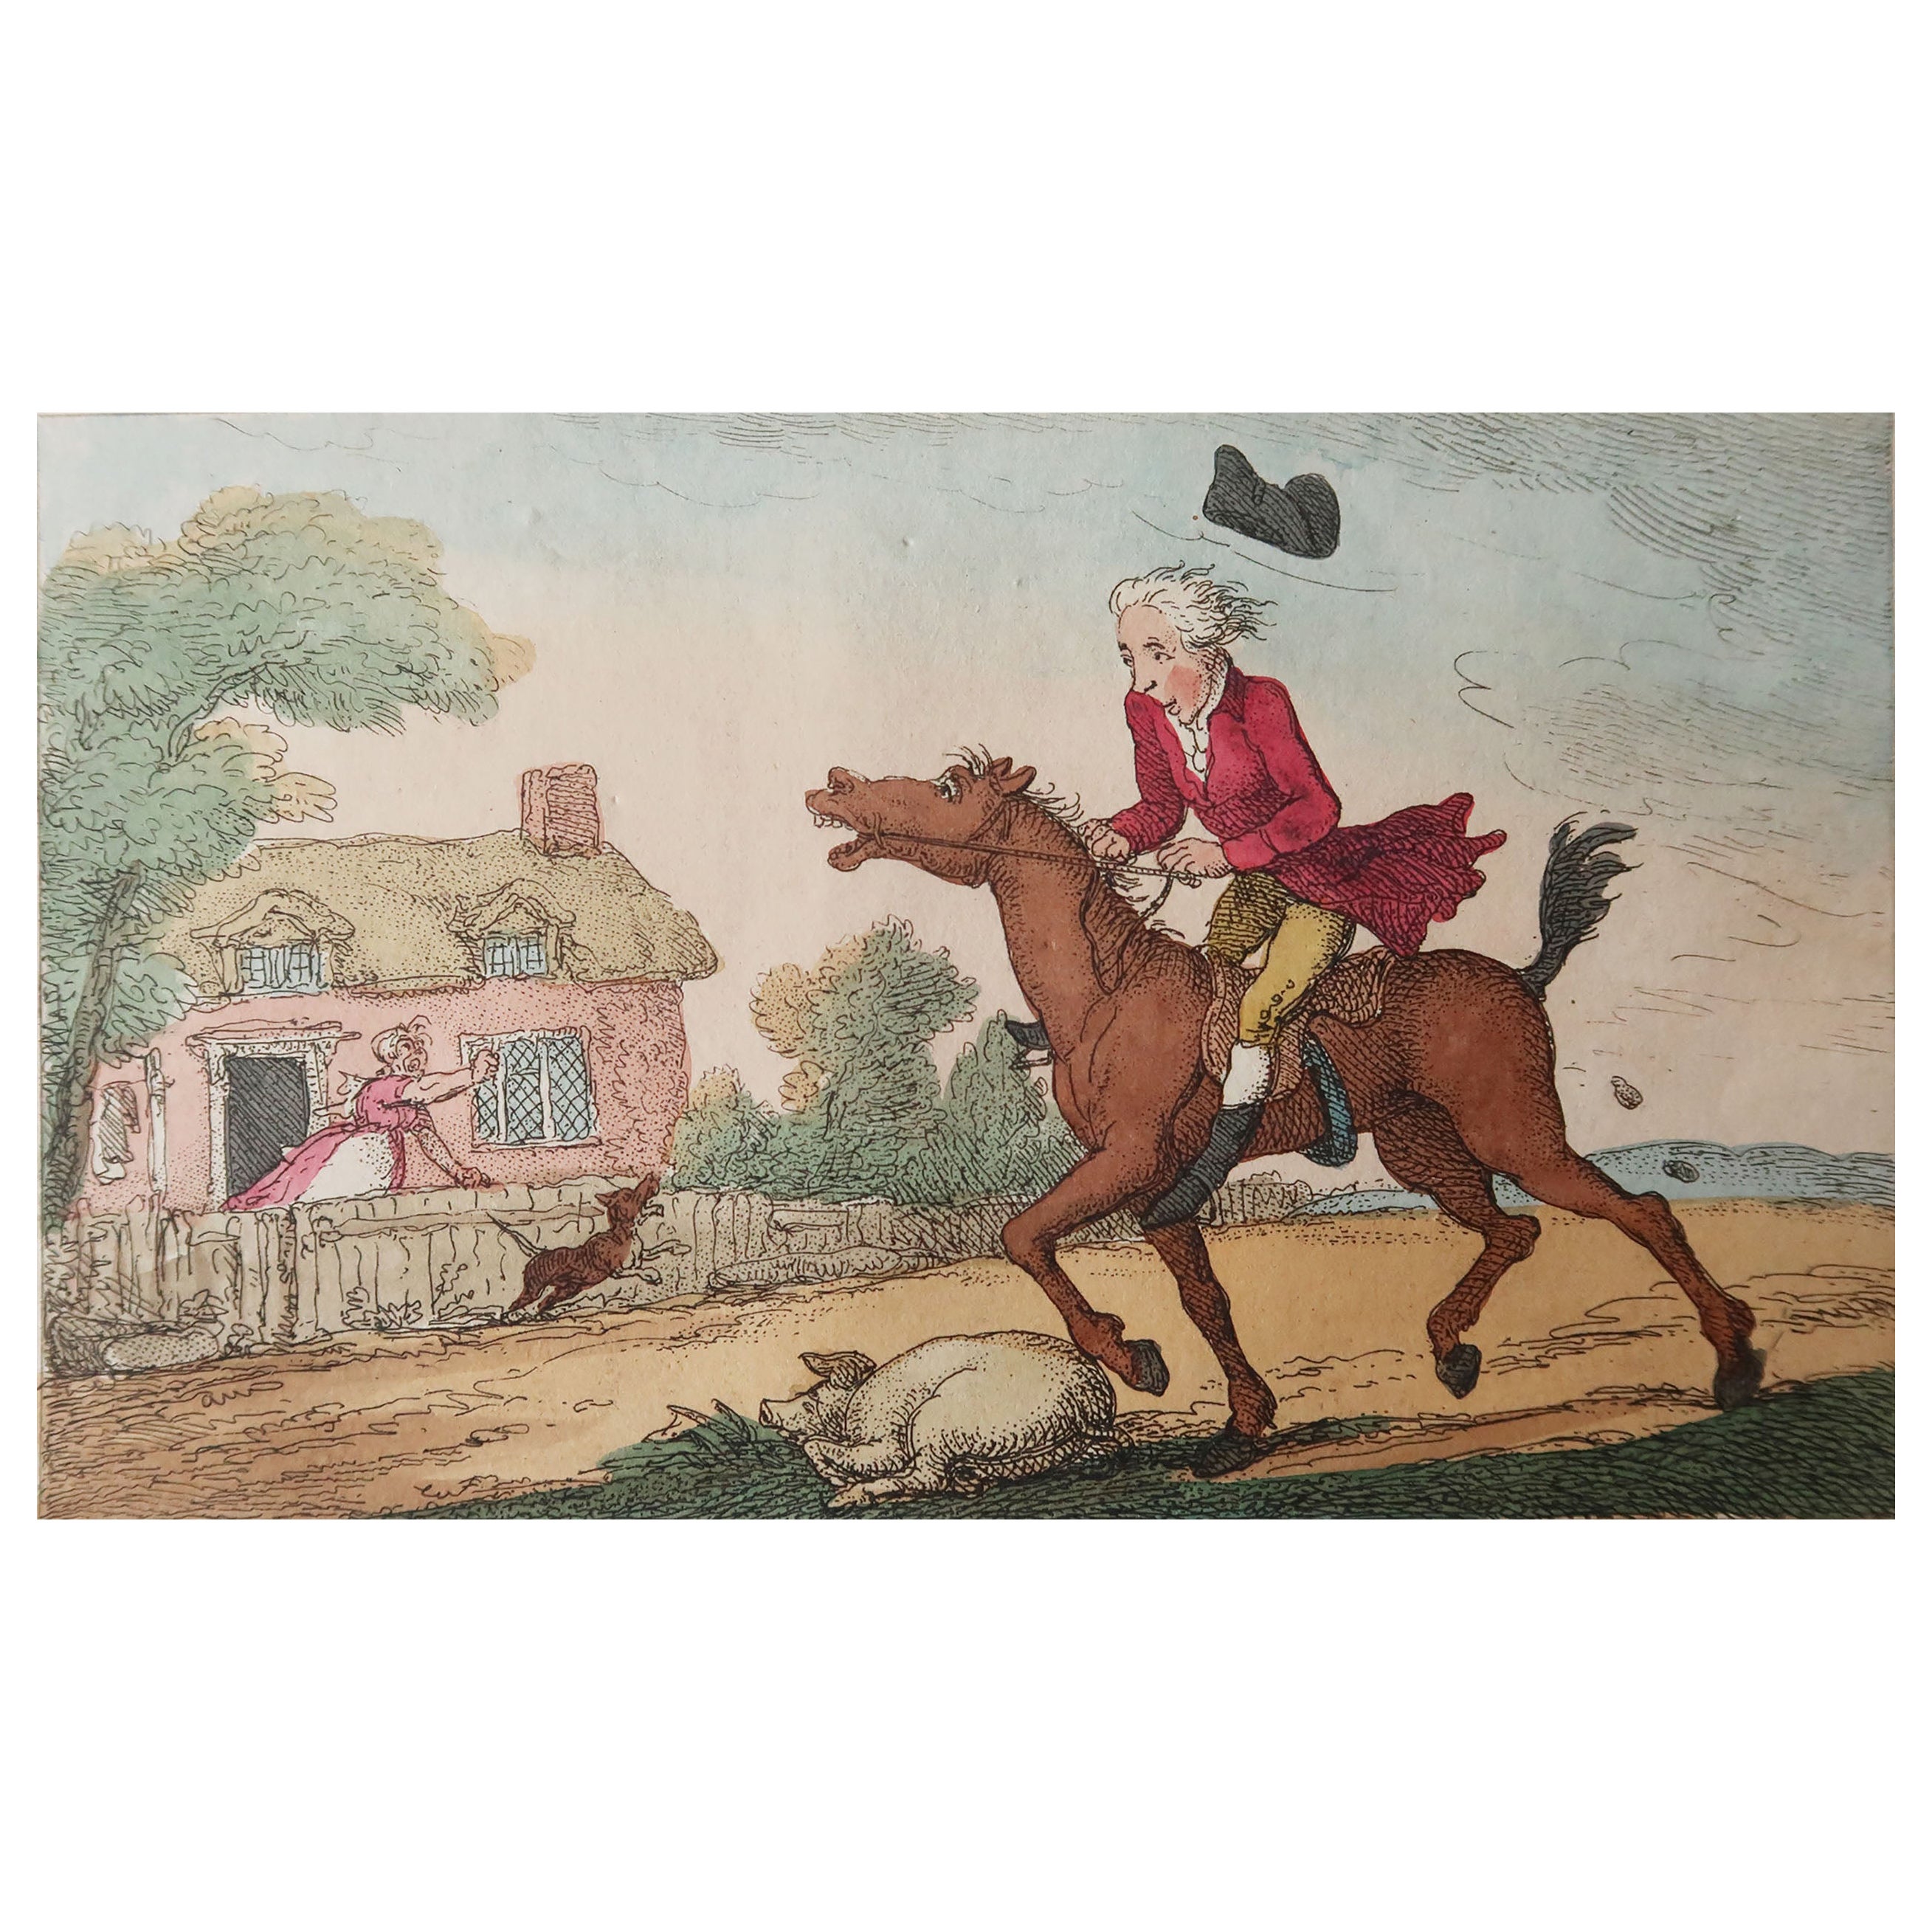 Grabado original antiguo según Thomas Rowlandson, Daisy Cutter. Fechado en 1808